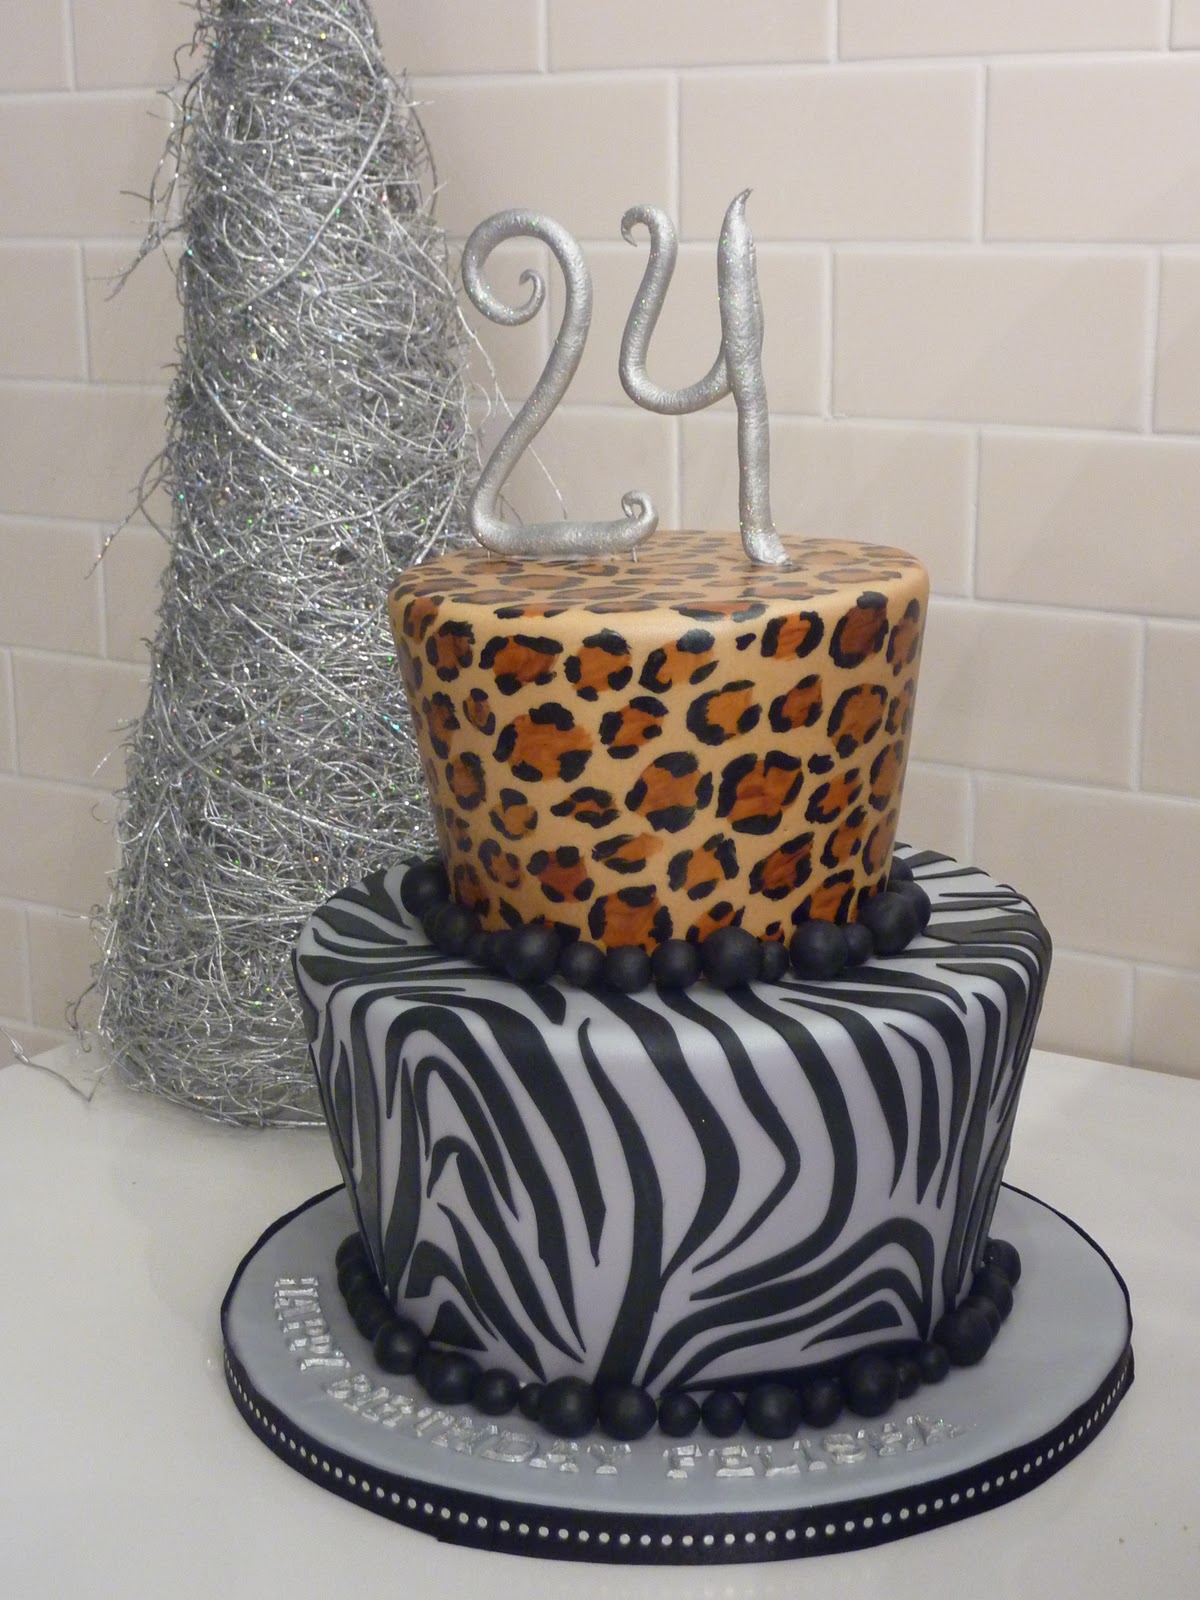 Zebra and Leopard Print Cake